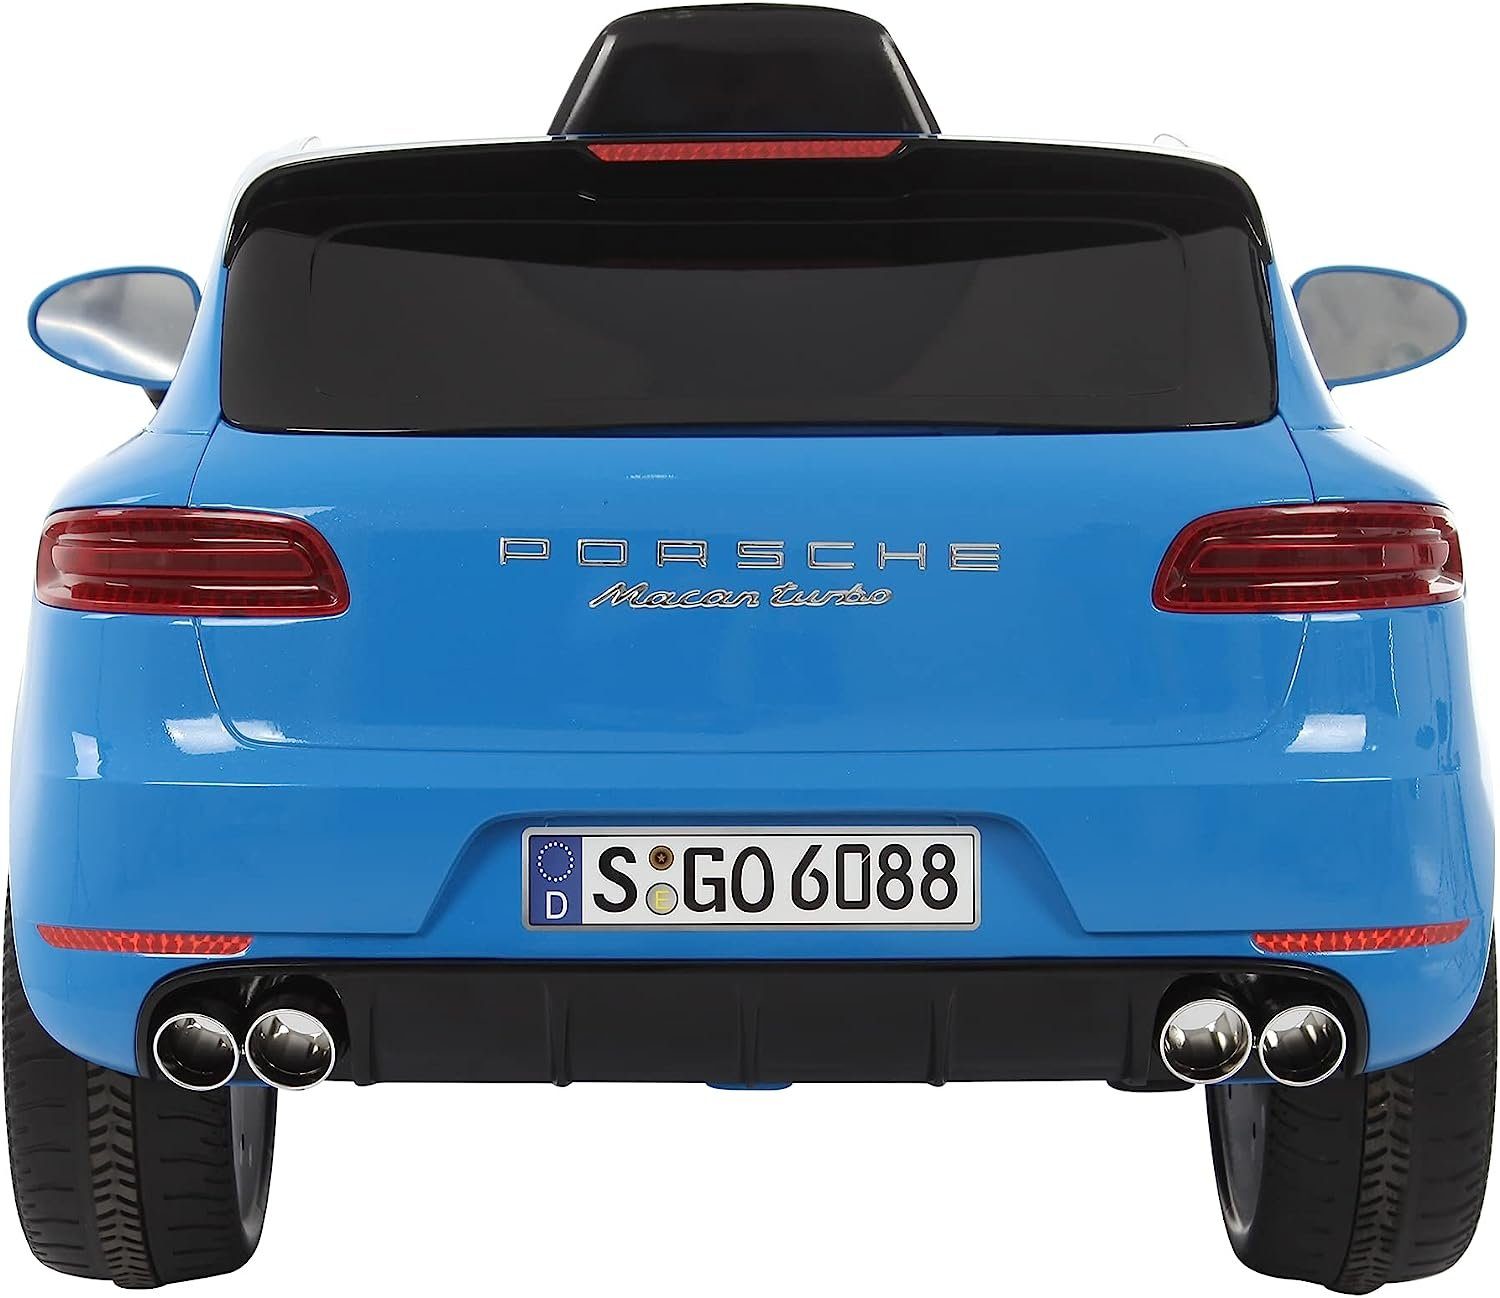 ab Macan SUV Rollplay Porsche Turbo + Elektroauto Elektro-Kinderauto Jahre Premium 3